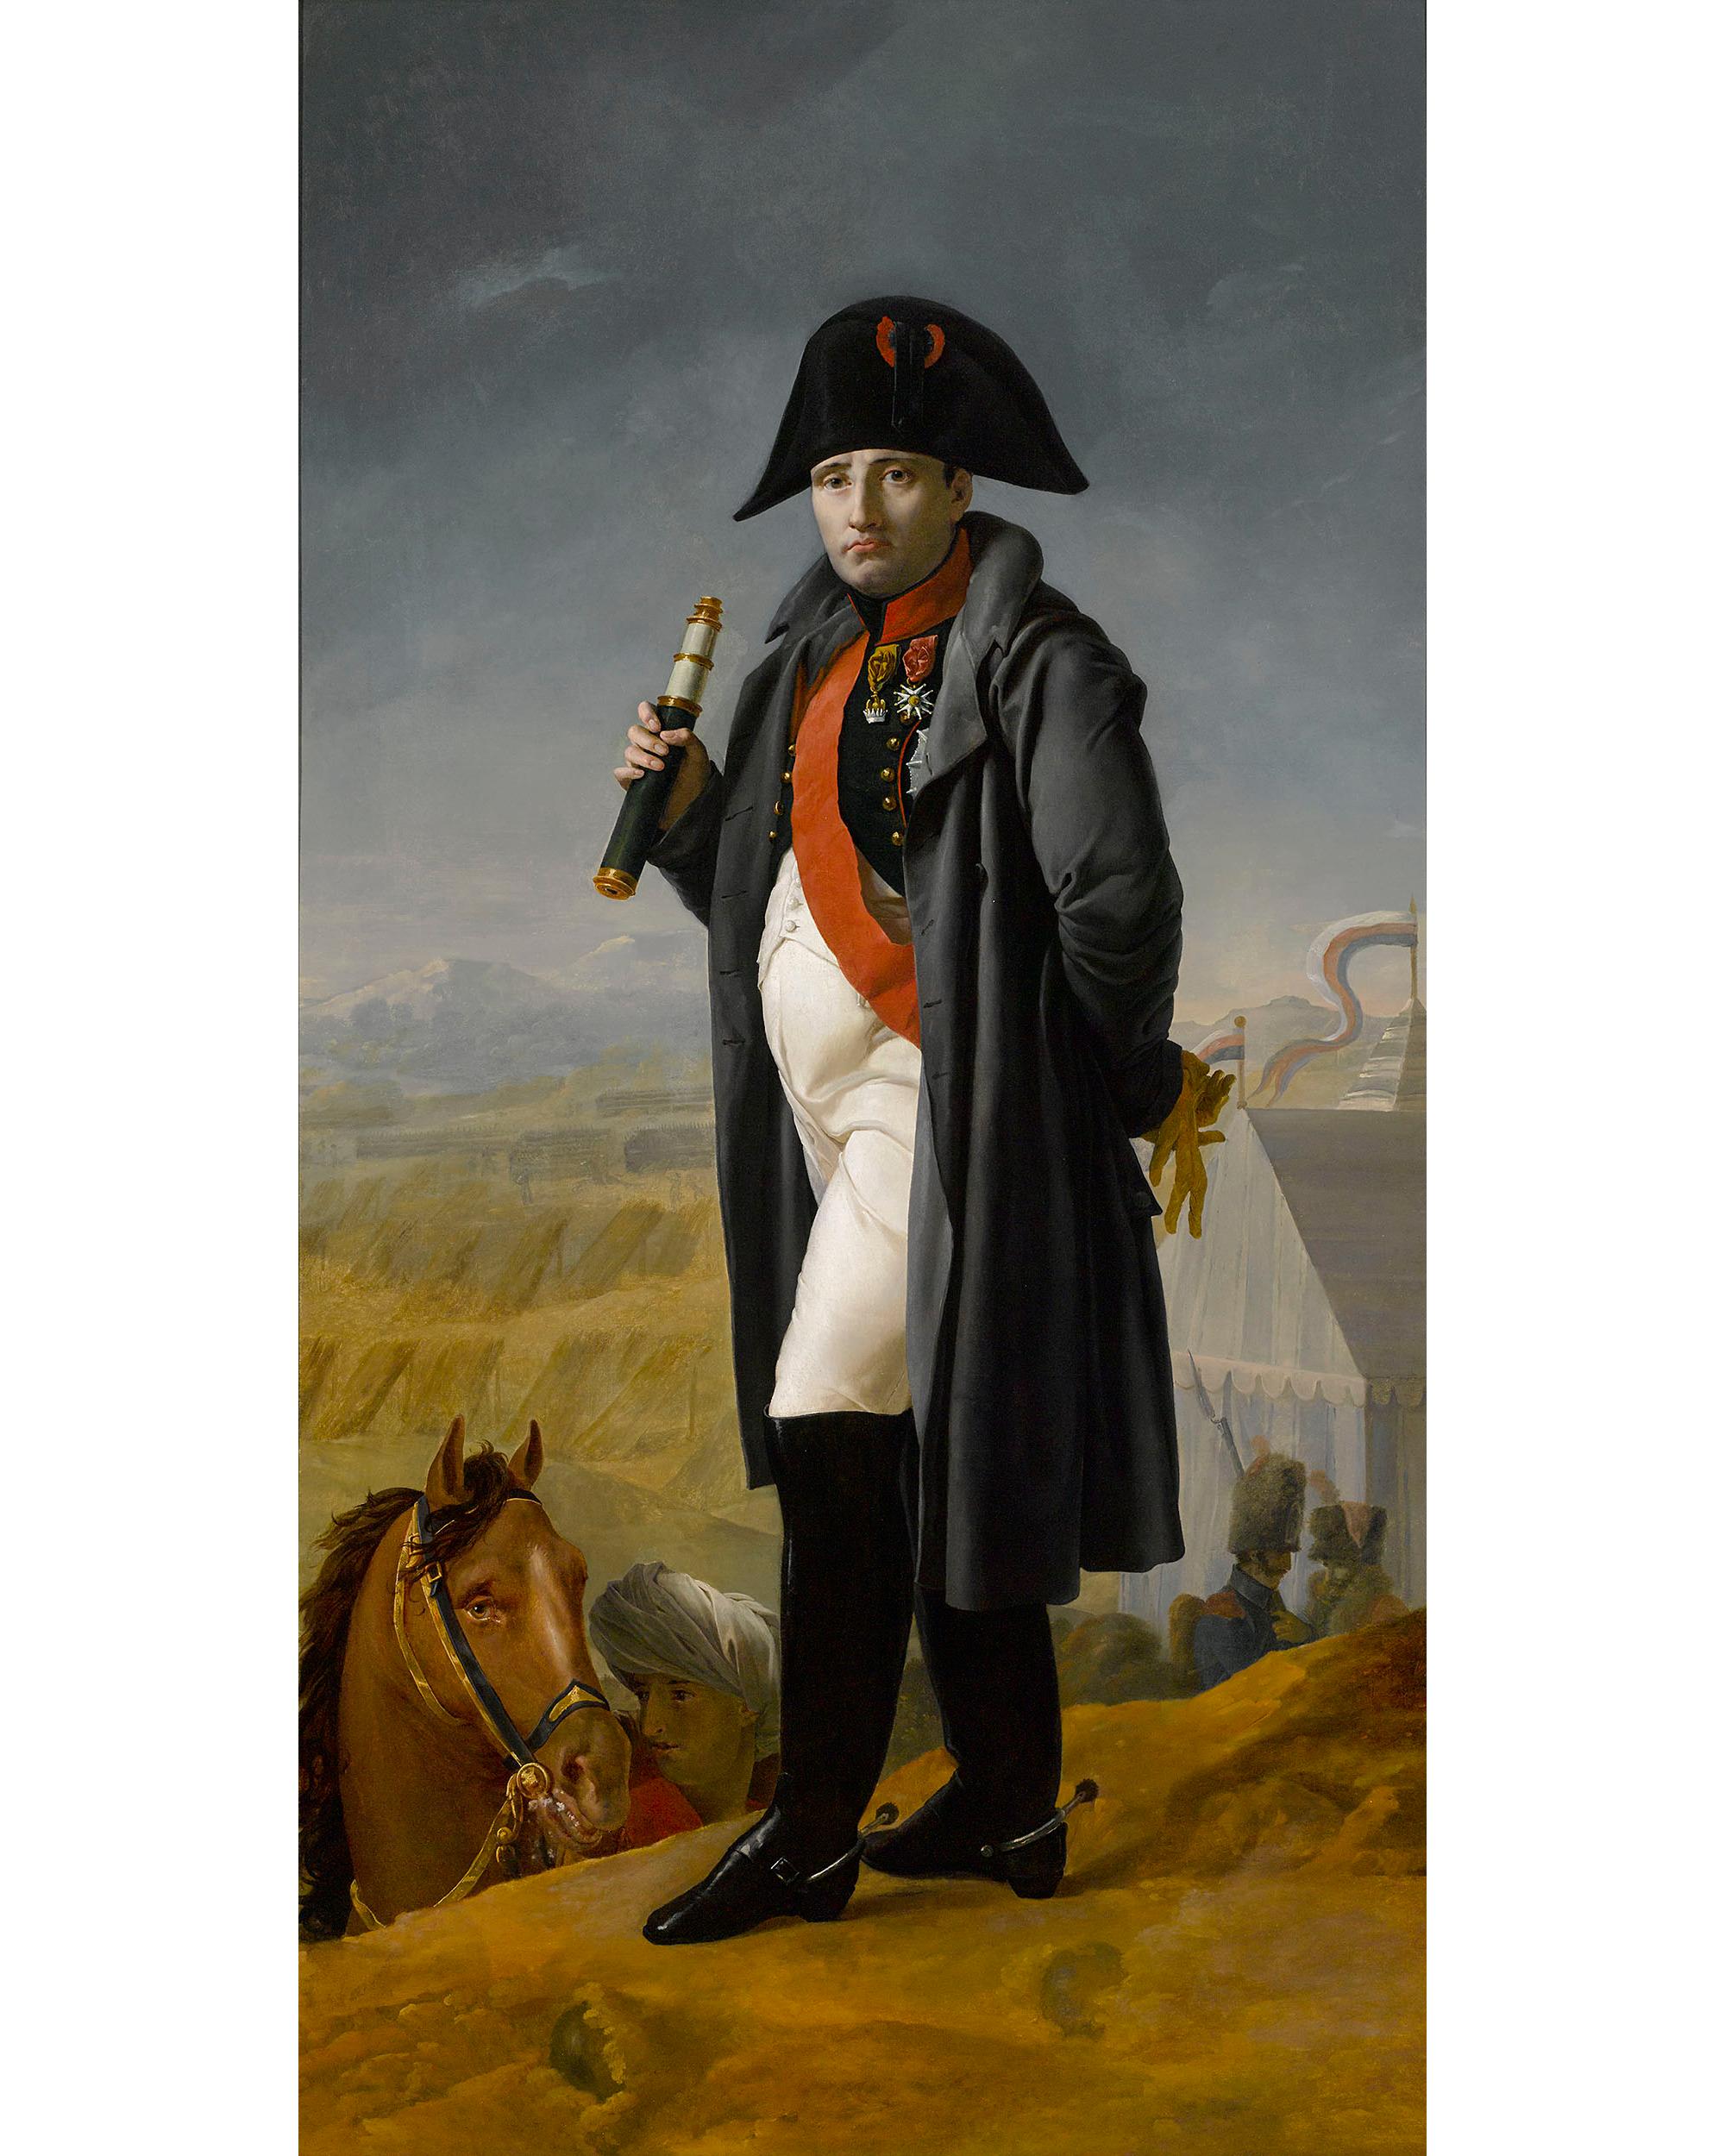 Joseph Franque Portrait Painting - Napoléon before the Battle of Moscow